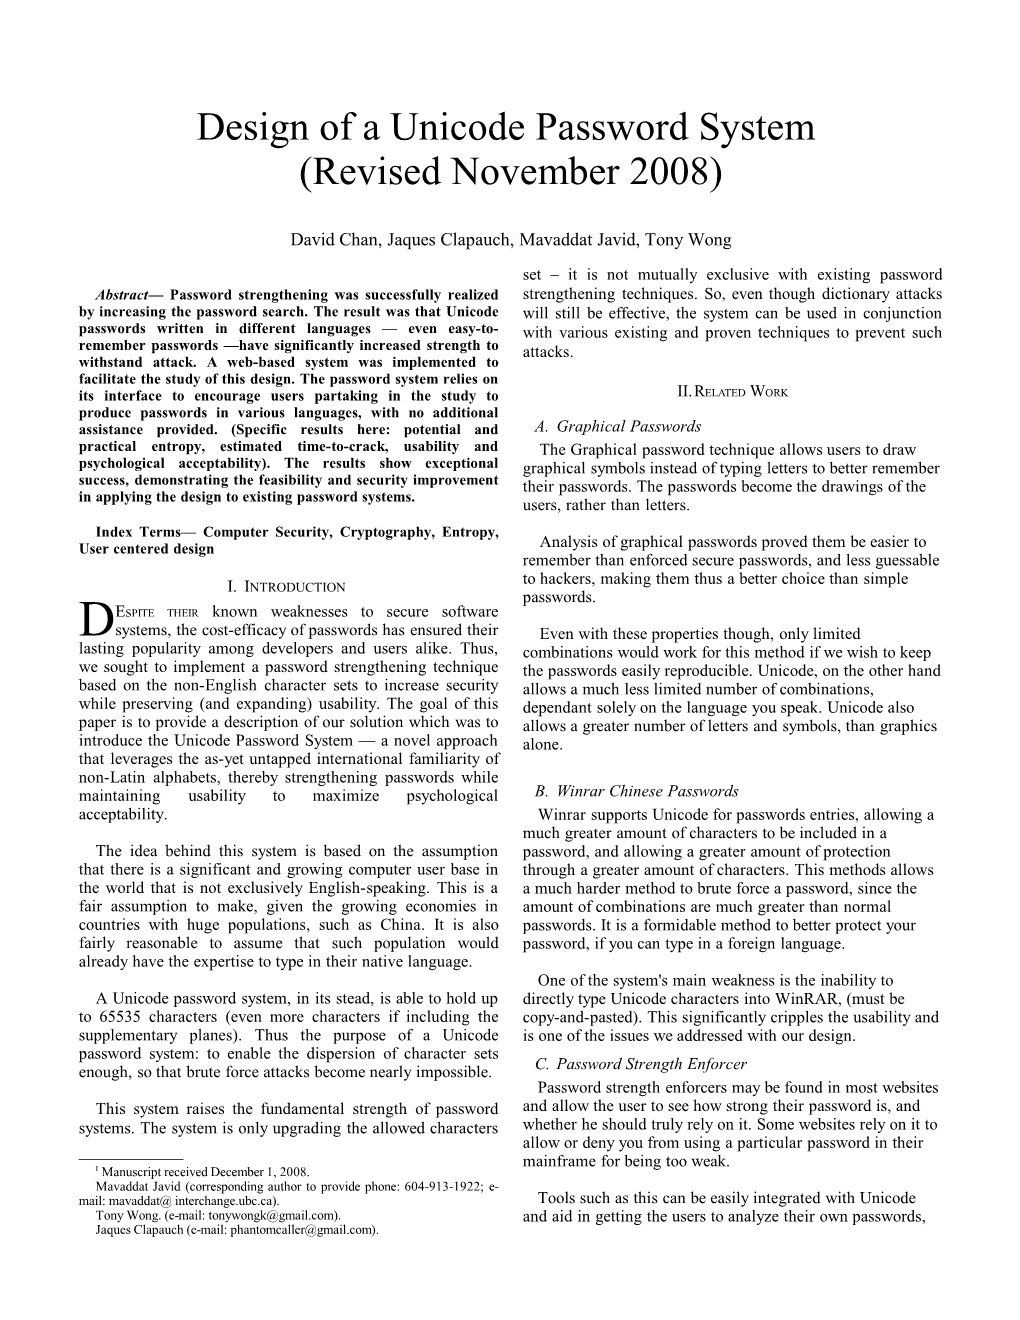 Design of a Unicode Password System (Revised November 2008)